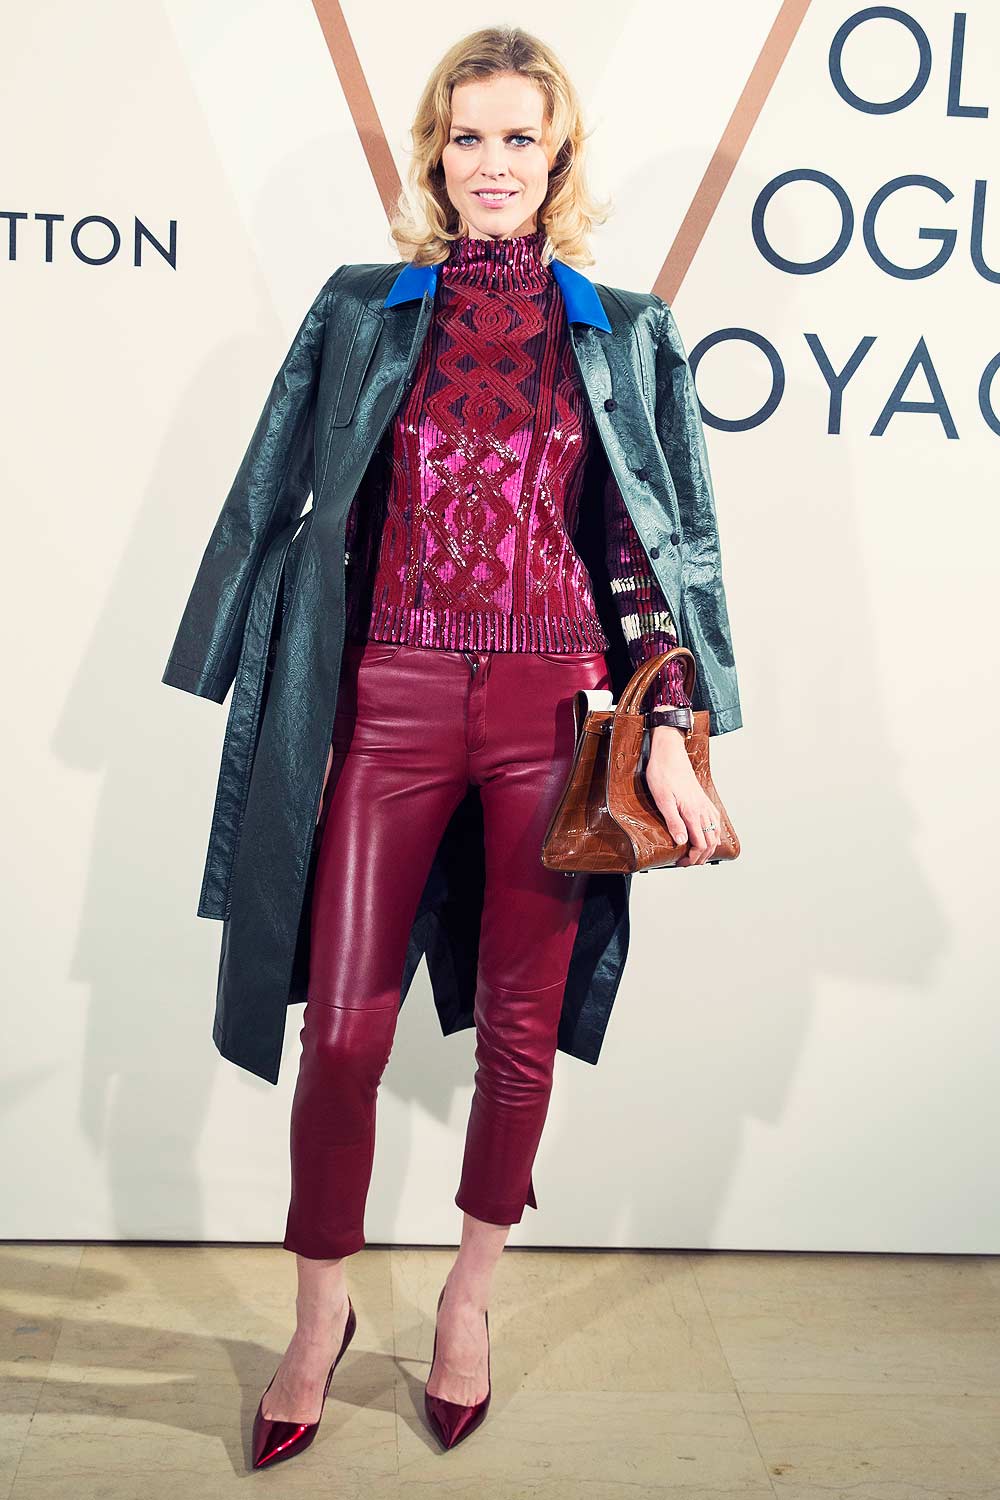 Eva Herzigova attends Louis Vuitton exhibition opening